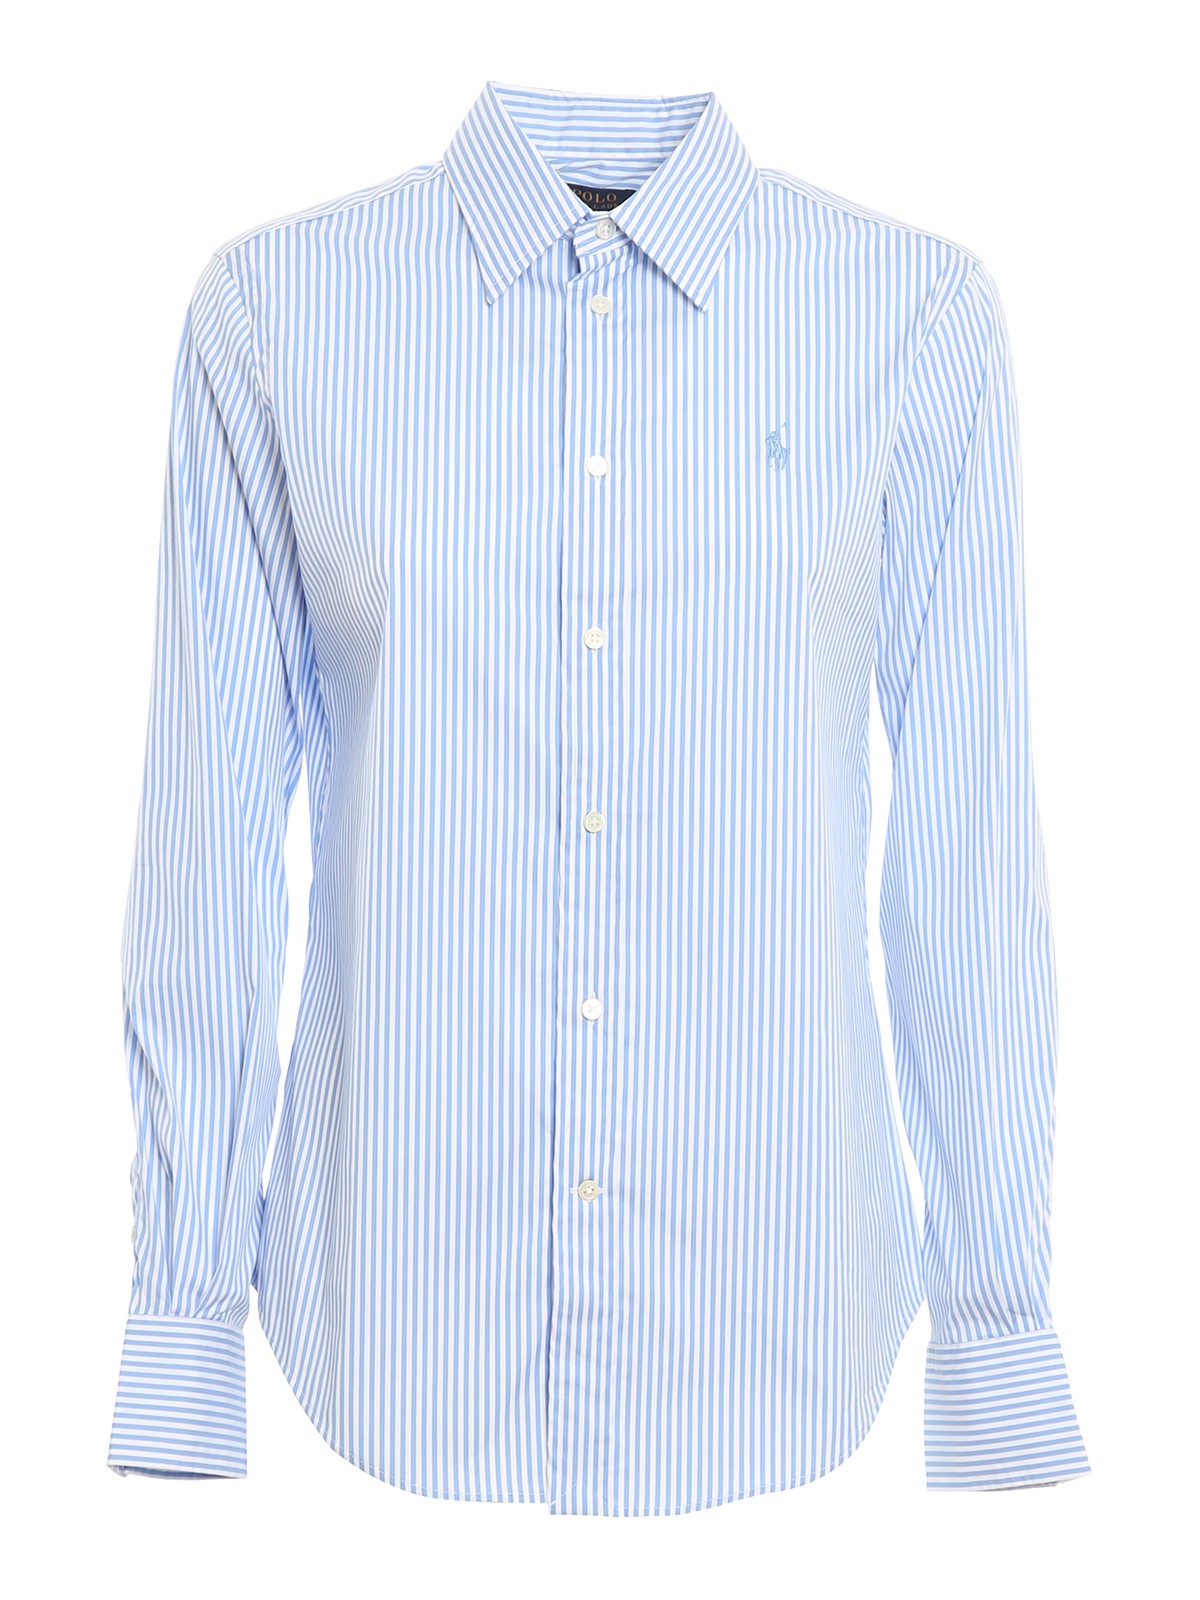 Shirts Polo Ralph Lauren - Striped shirt - 211780676004 | iKRIX.com